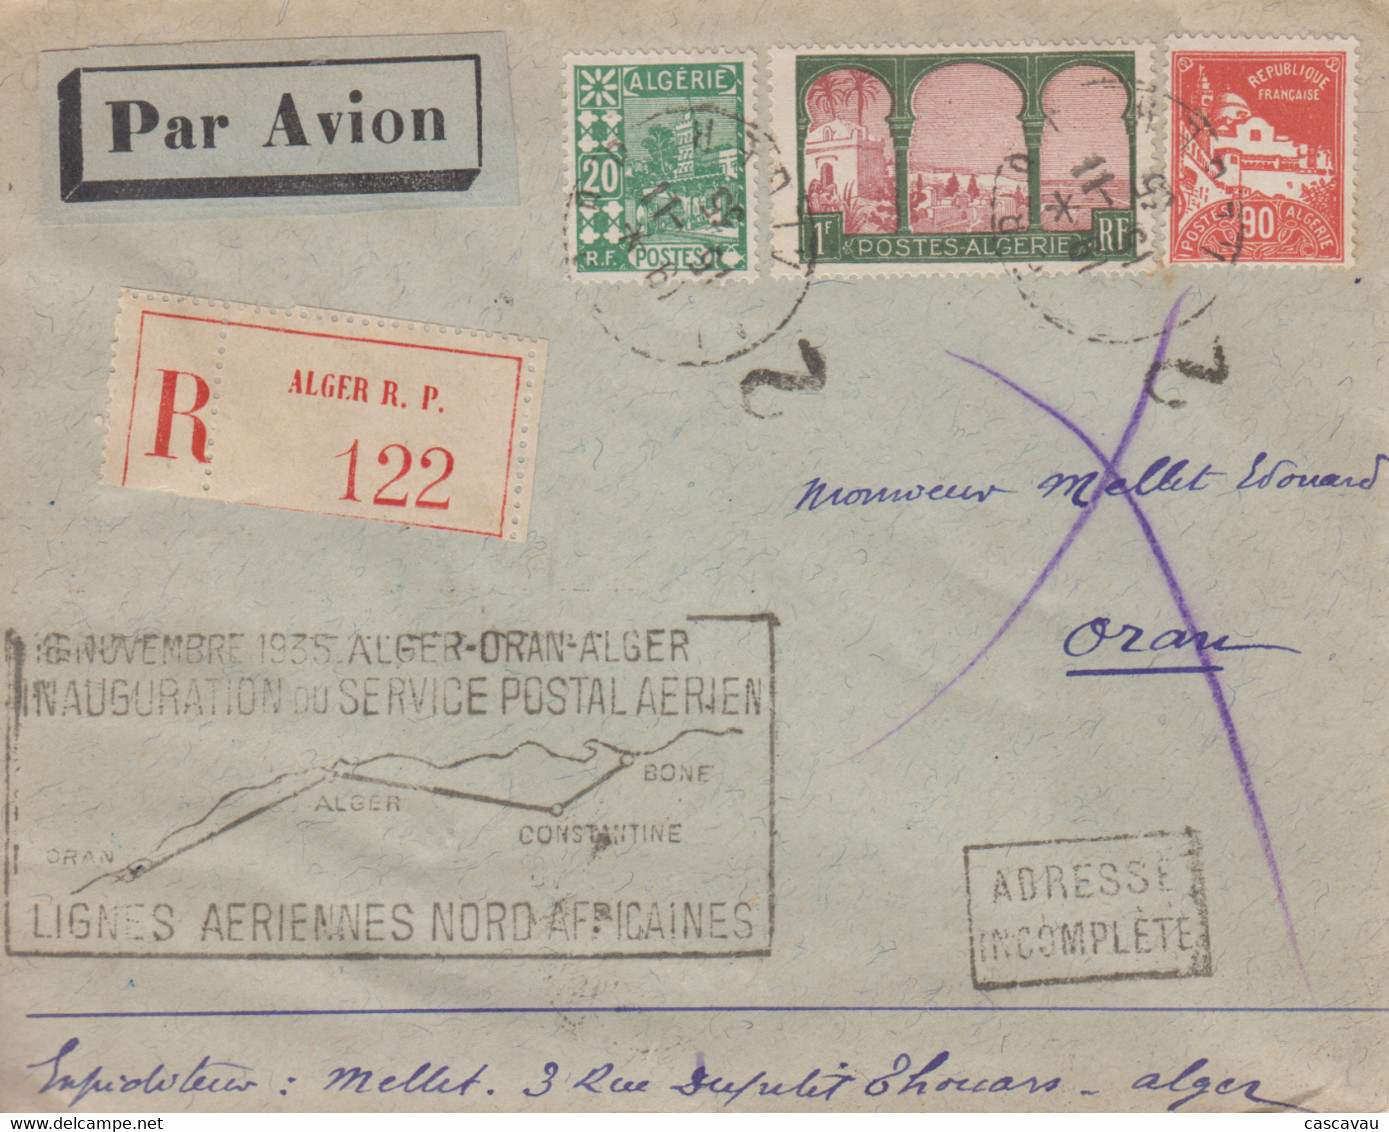 Enveloppe  Recommandée  ALGERIE   Inauguration   Service  Postal   Aérien    ALGER - ORAN - ALGER   1935 - Luftpost